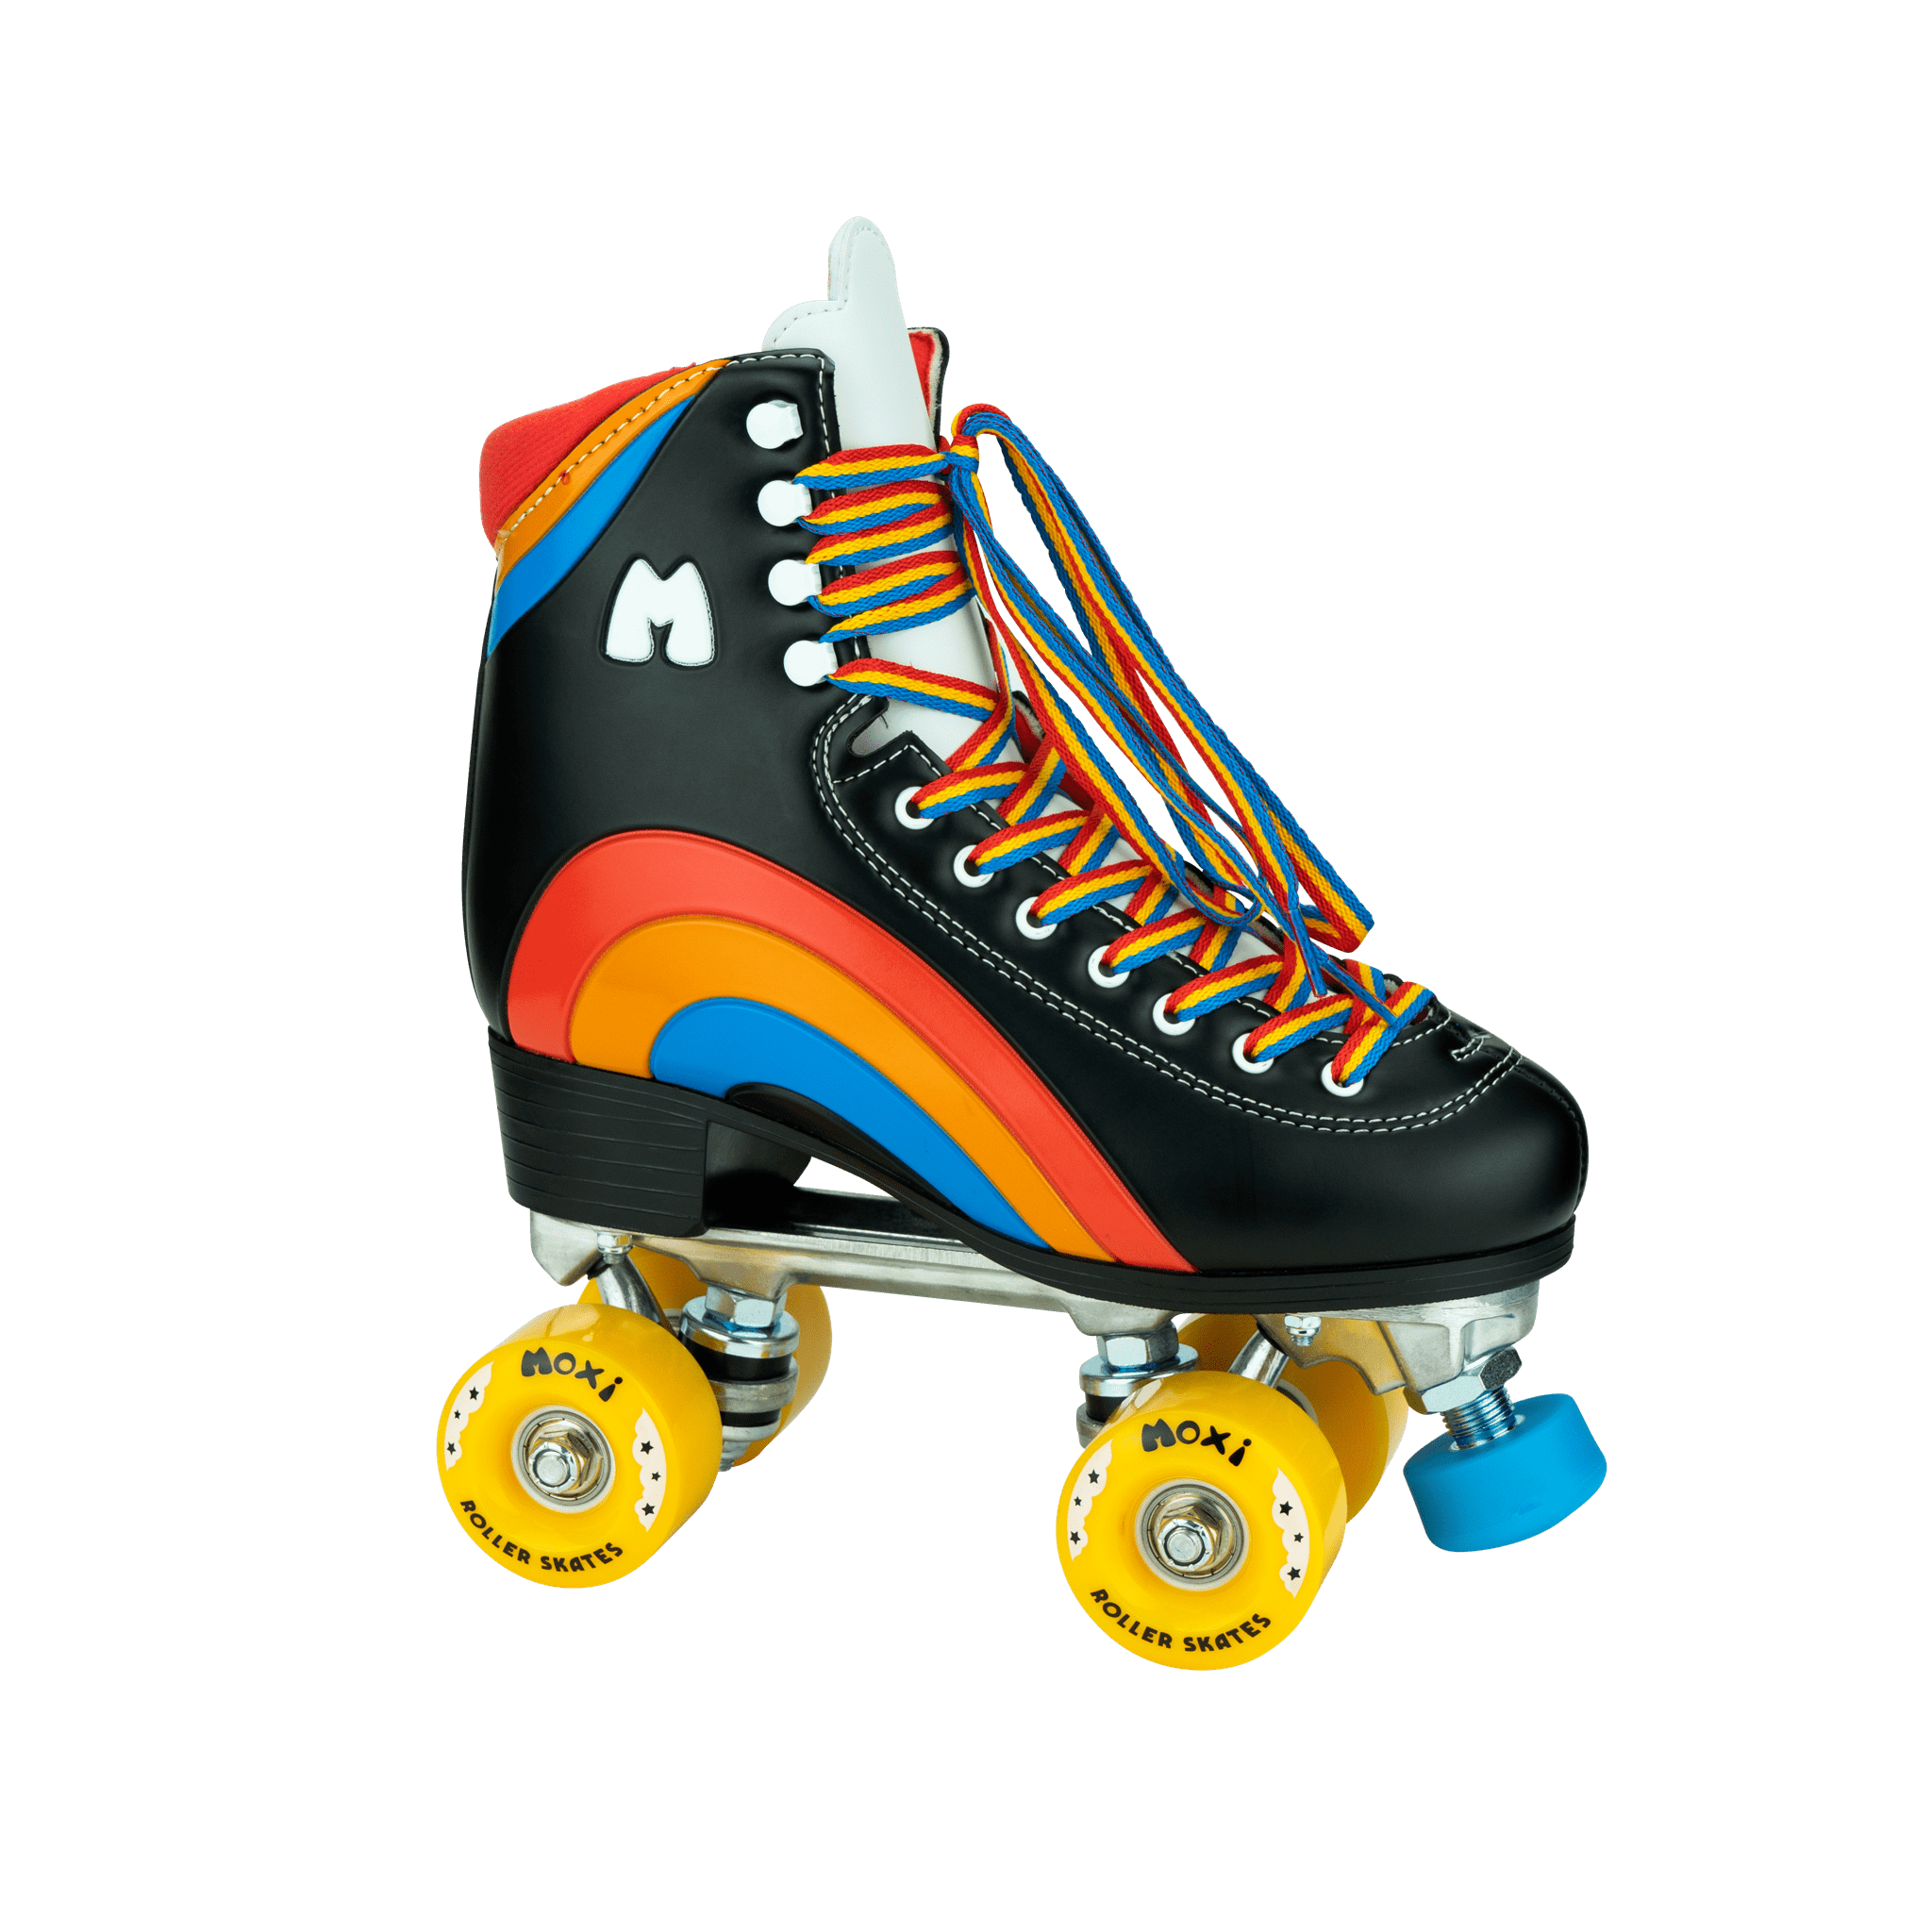 The Rainbow Rider skate